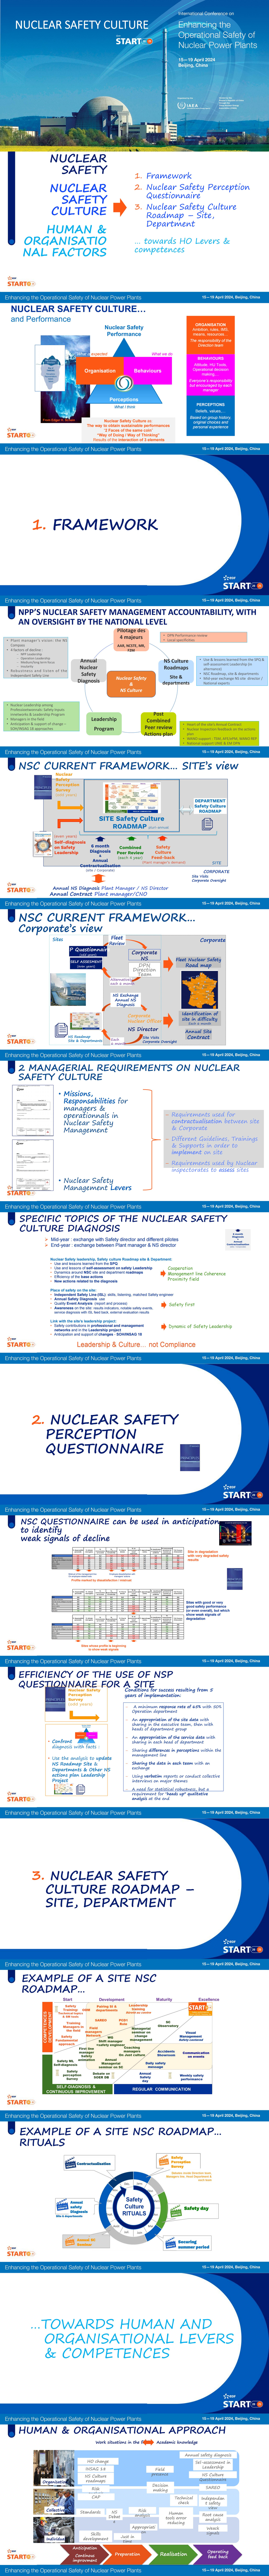 16_11_B Le Guen_ Nuclear Safety Culture_00.jpg